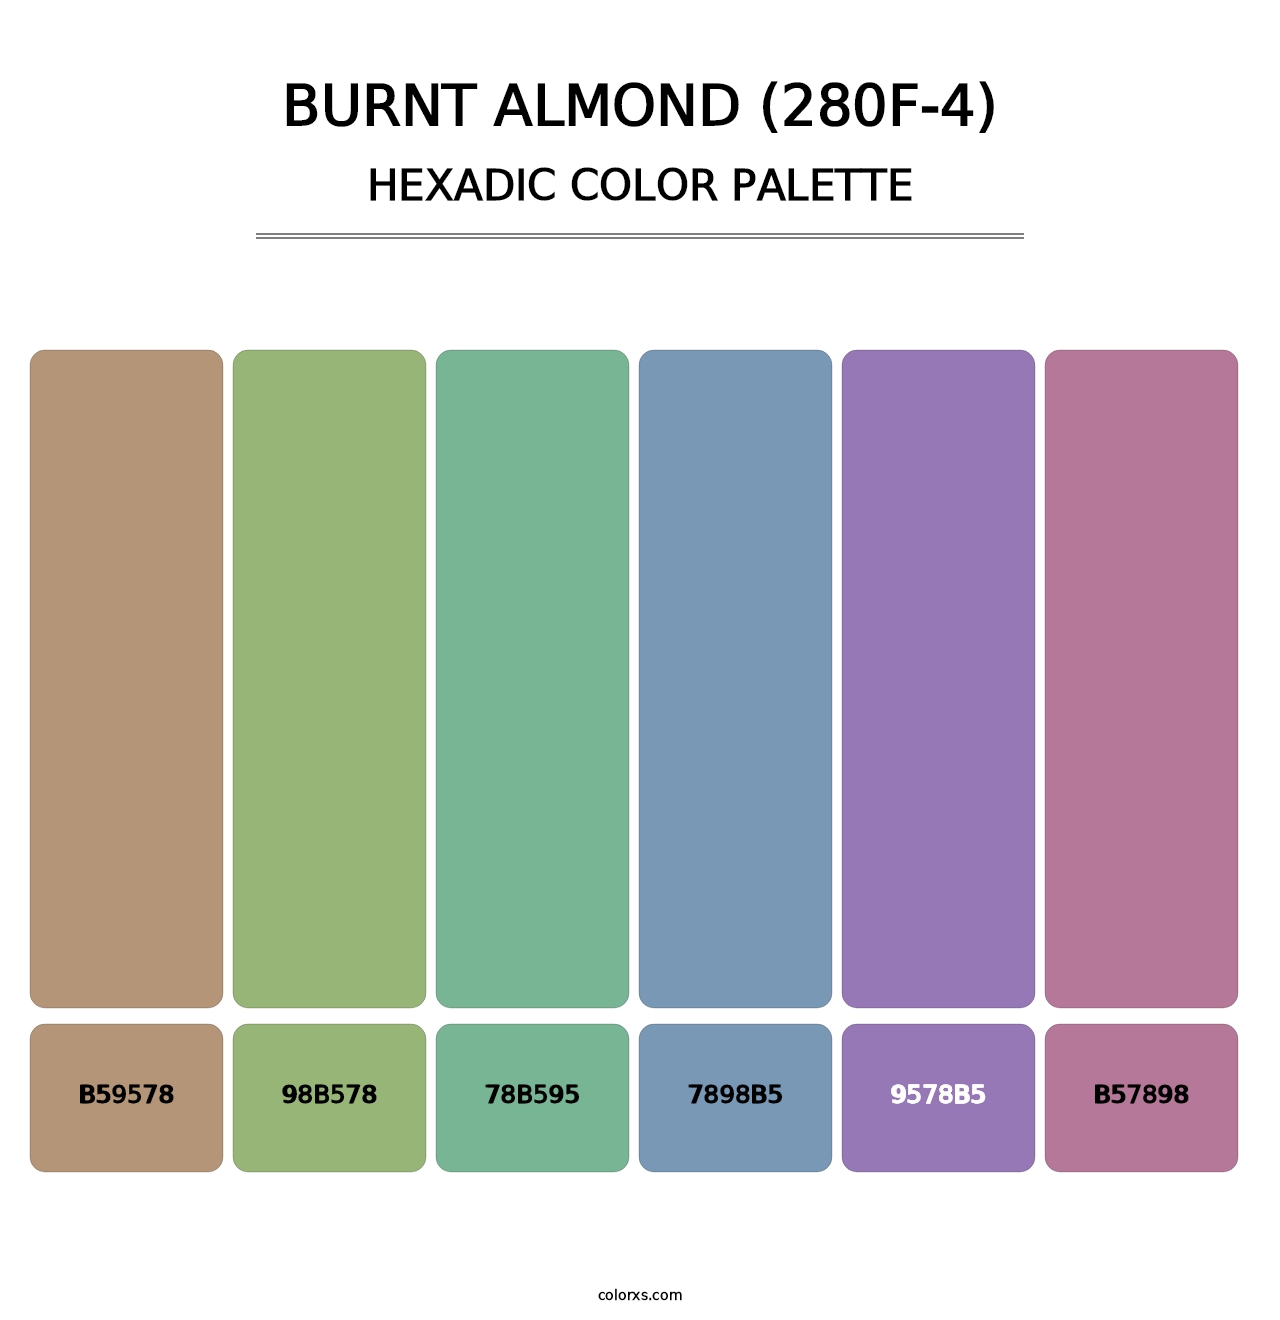 Burnt Almond (280F-4) - Hexadic Color Palette